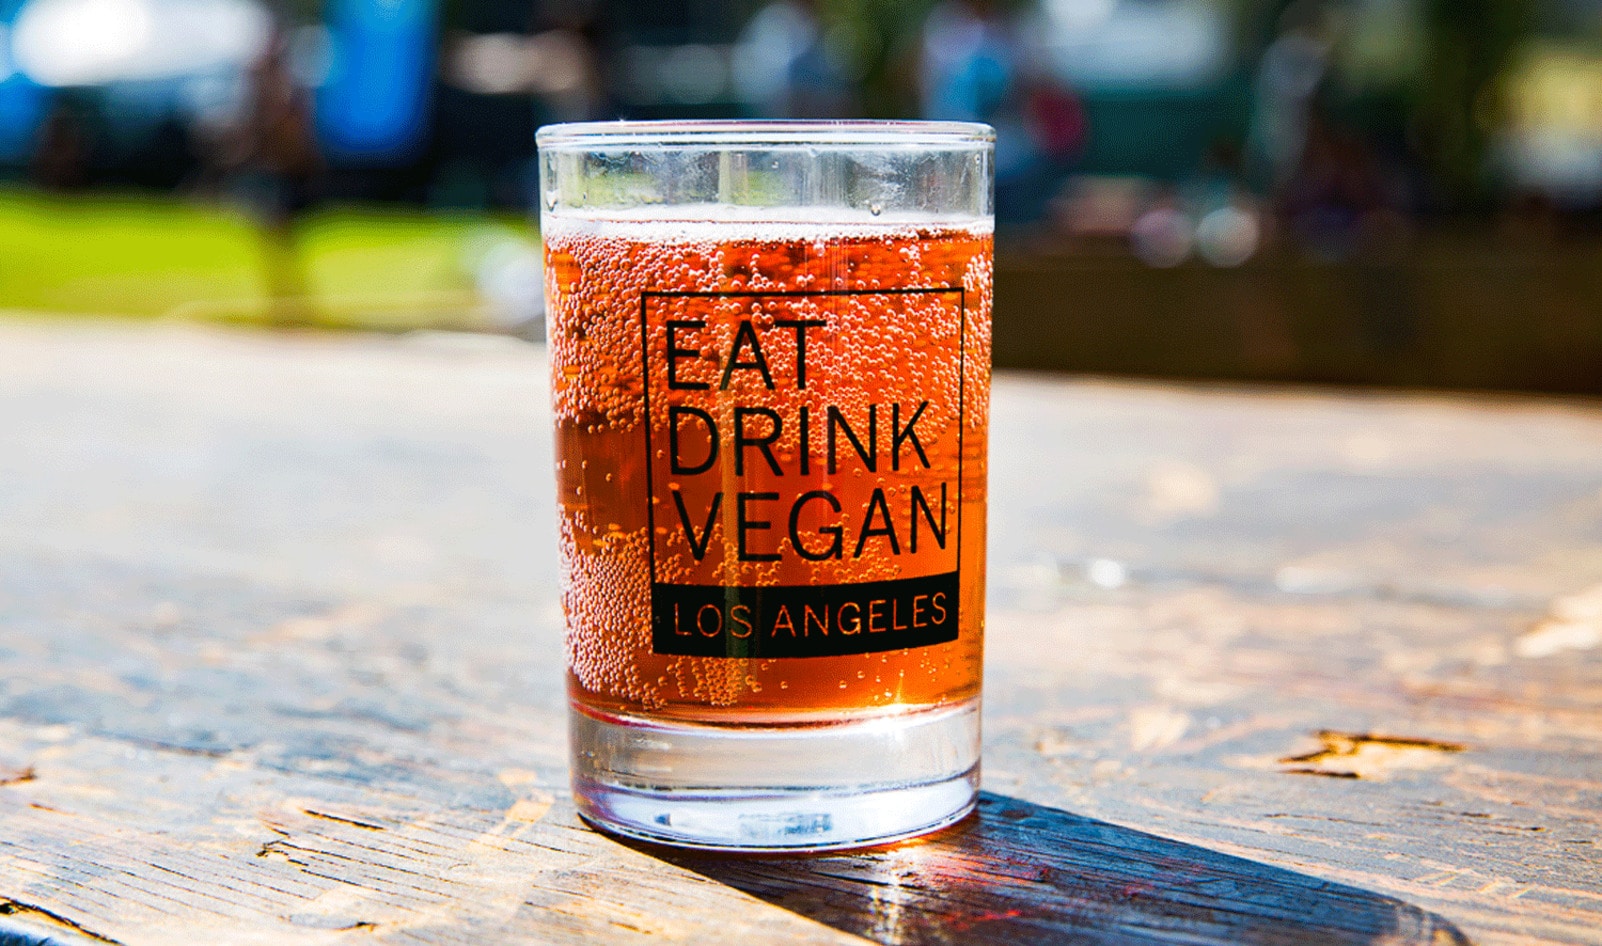 LA’s Eat Drink Vegan Holds Final Festival After 10 Years